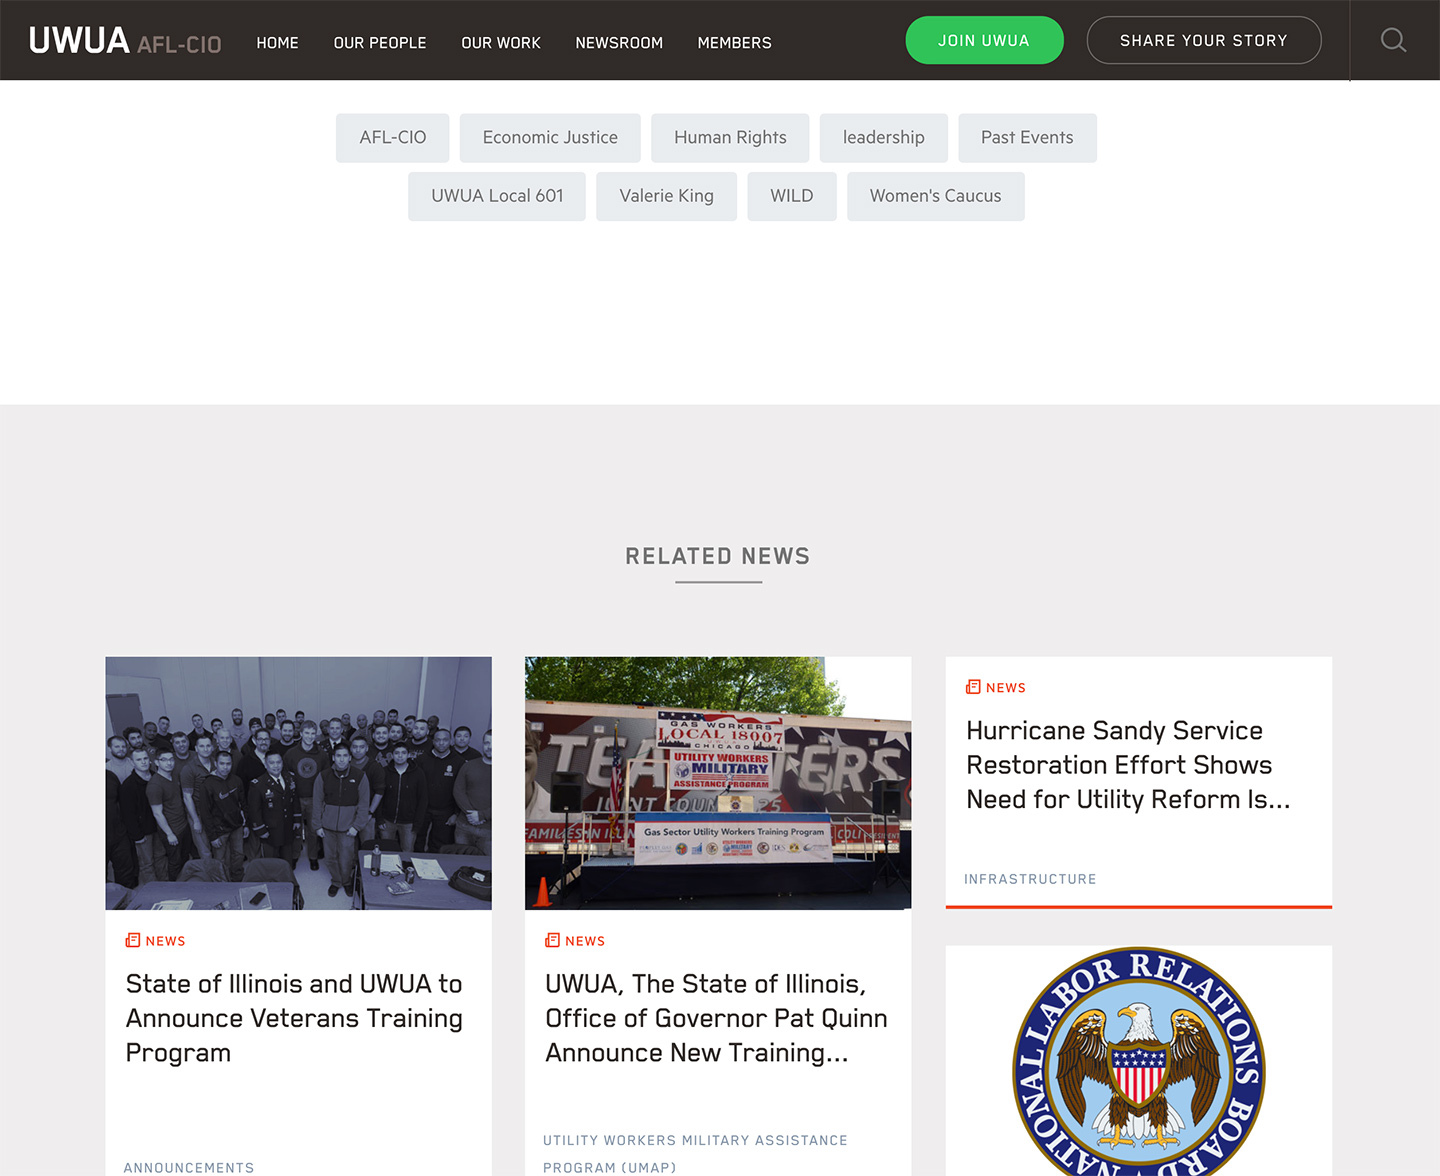 Utility Workers Union of America (UWUA): UWUA Utility Workers Union of America - News and Tags